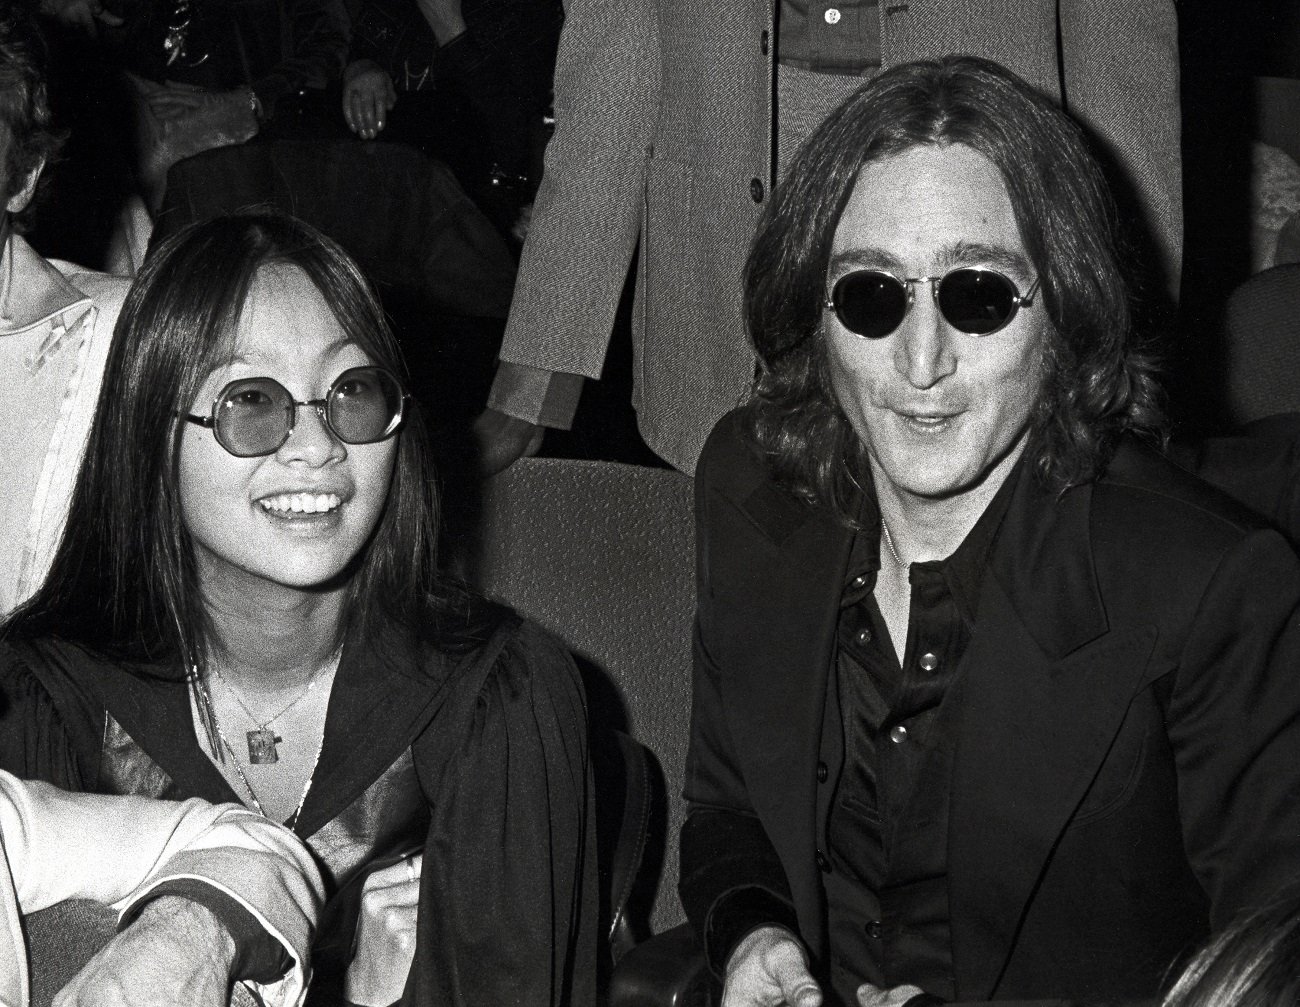 May Pang and John Lennon sit together and both wear sunglasses.